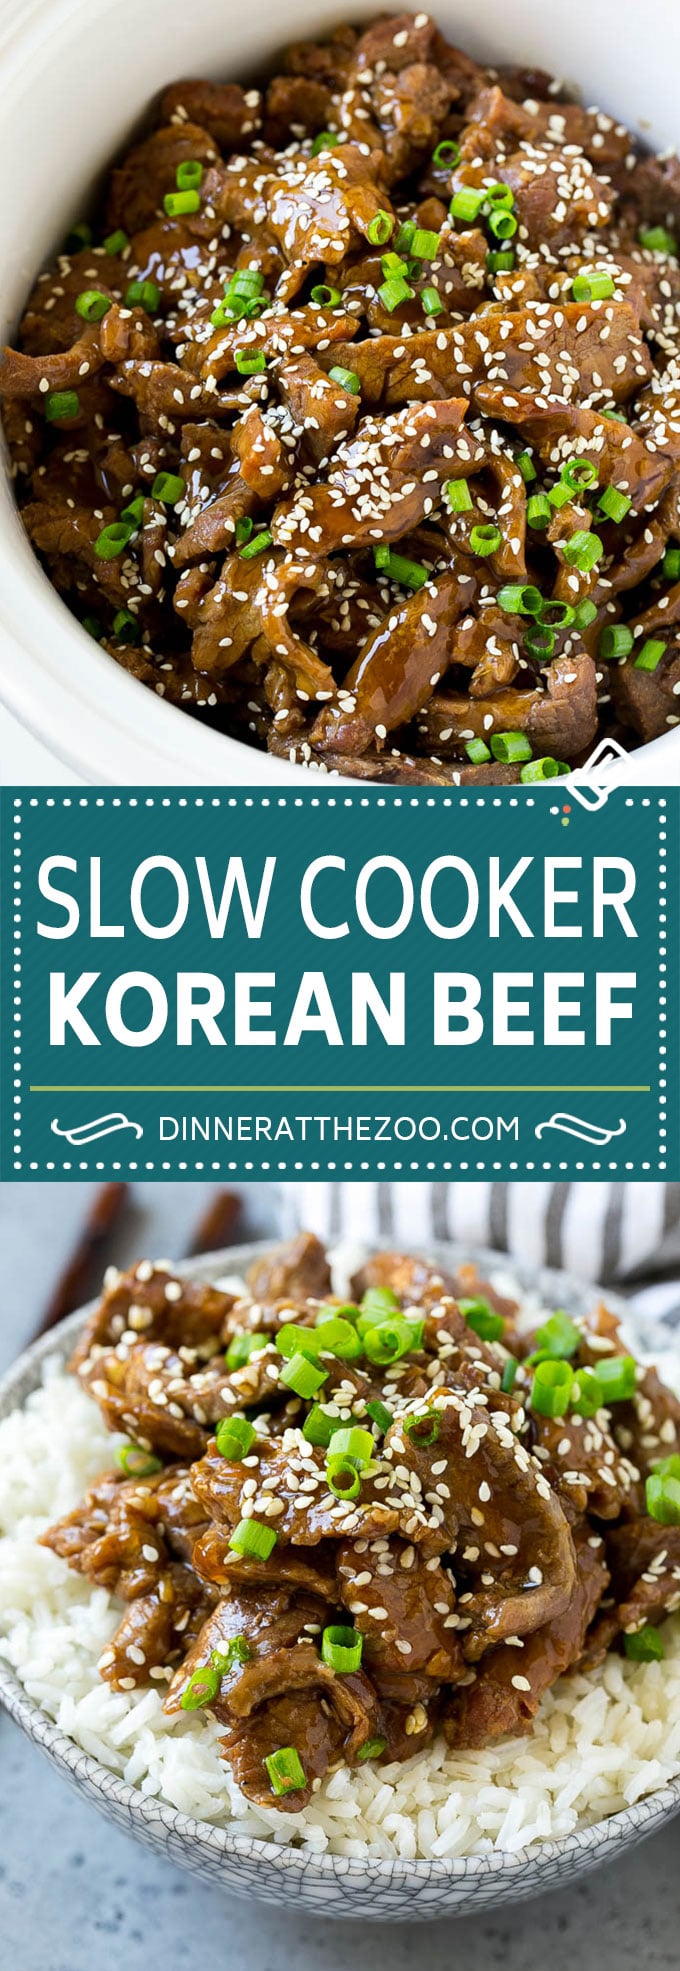 Slow Cooker Korean Beef Recipe | Korean Beef | Flank Steak Recipe #dinner #beef #slowcooker #crockpot #asian #dinneratthezoo